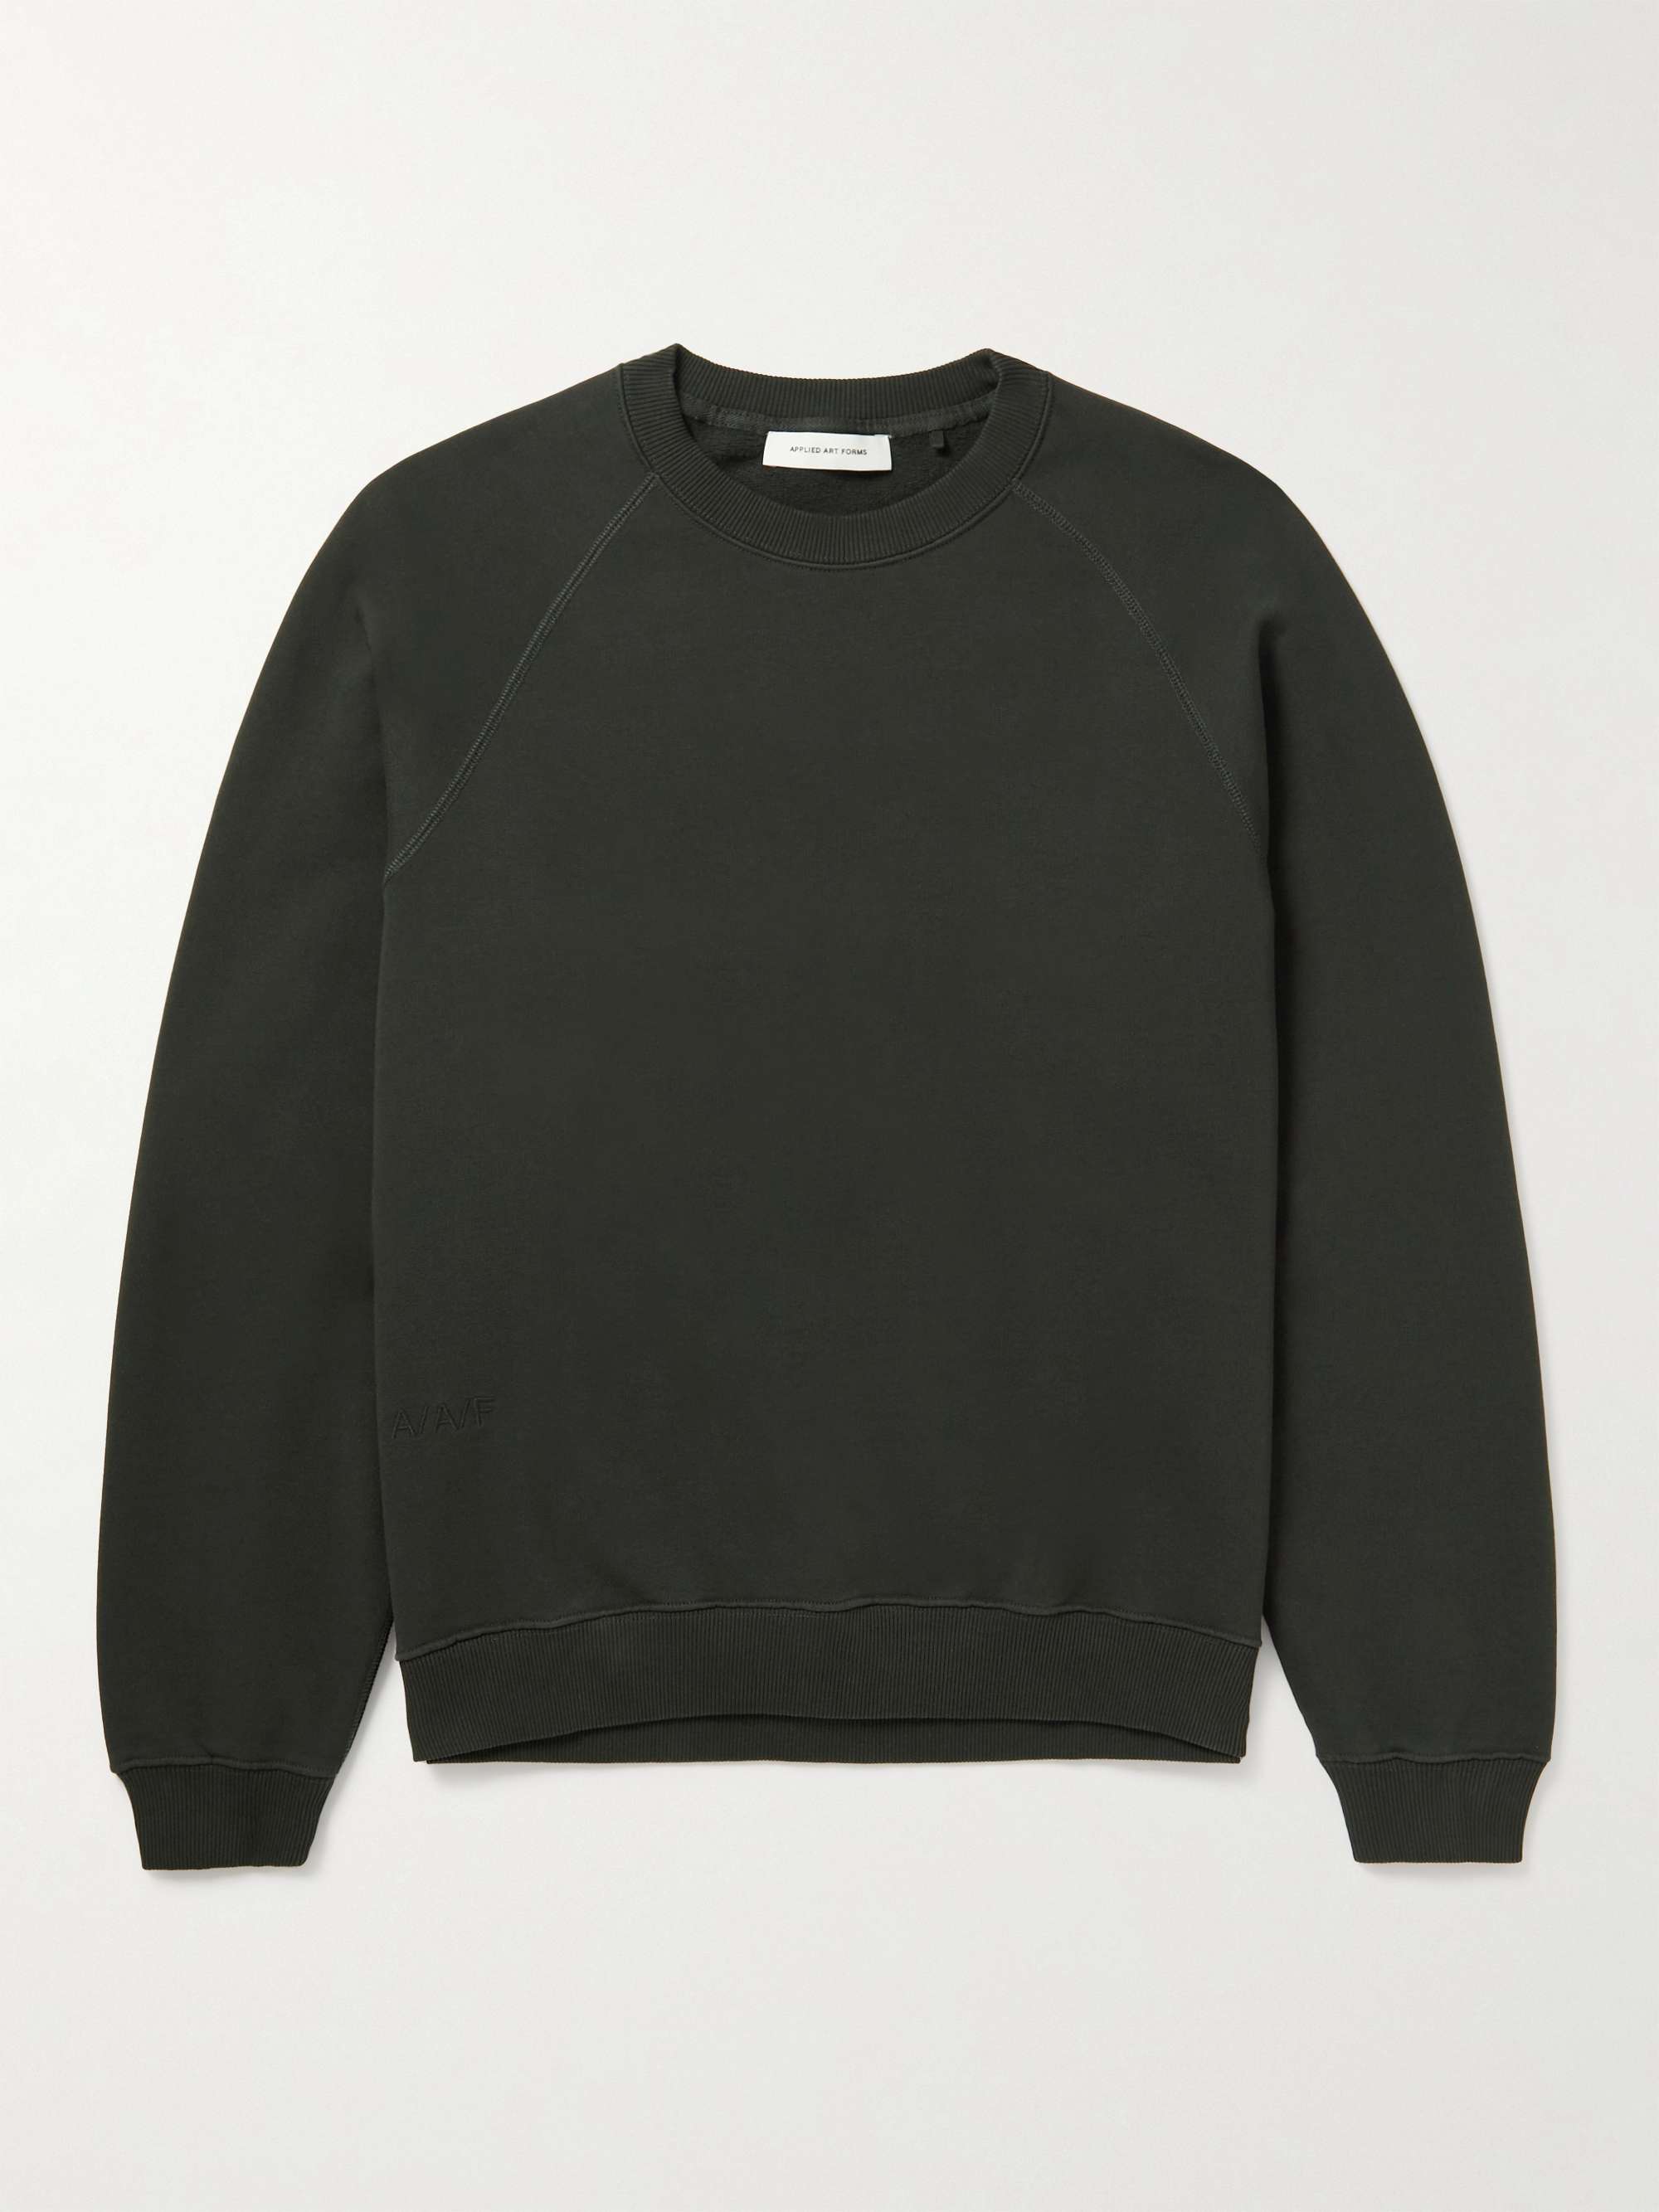 APPLIED ART FORMS NM1-5 Cotton-Jersey Sweatshirt